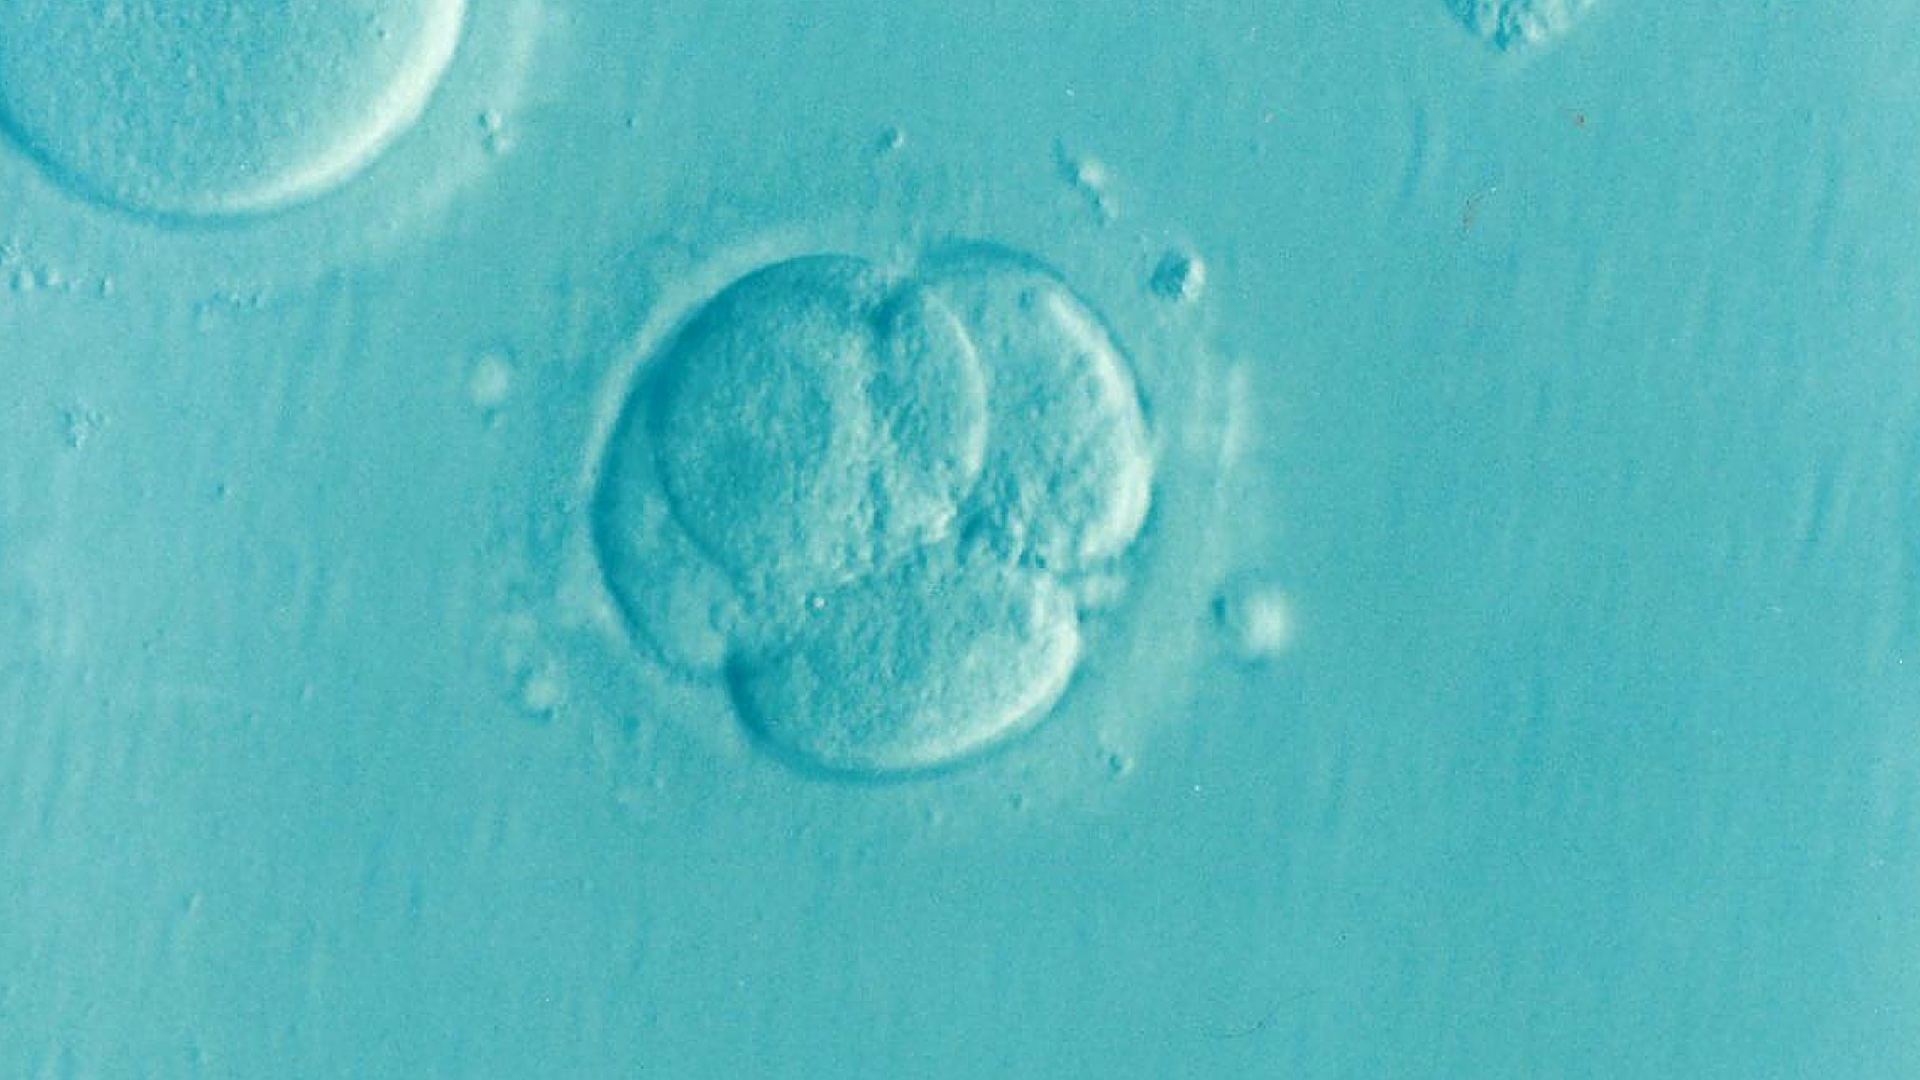 Human embryo on blue background